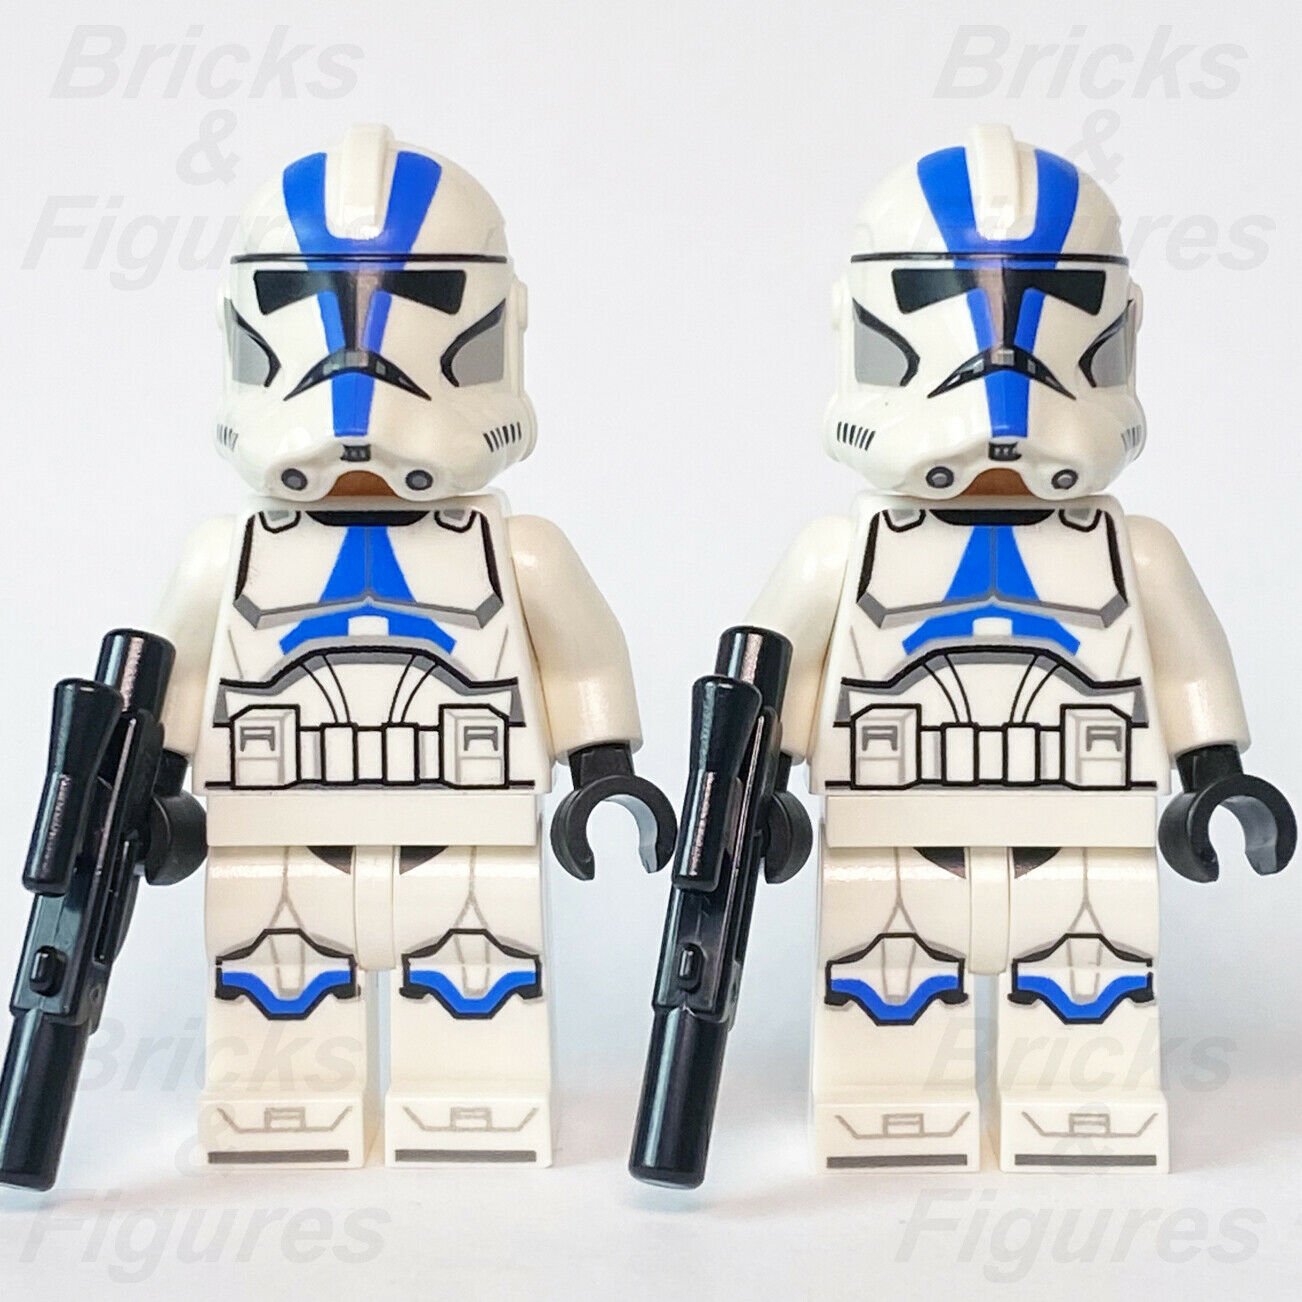 2 x New Star Wars LEGO 501st Legion Clone Trooper Episode 3 Minifigures 75280 3